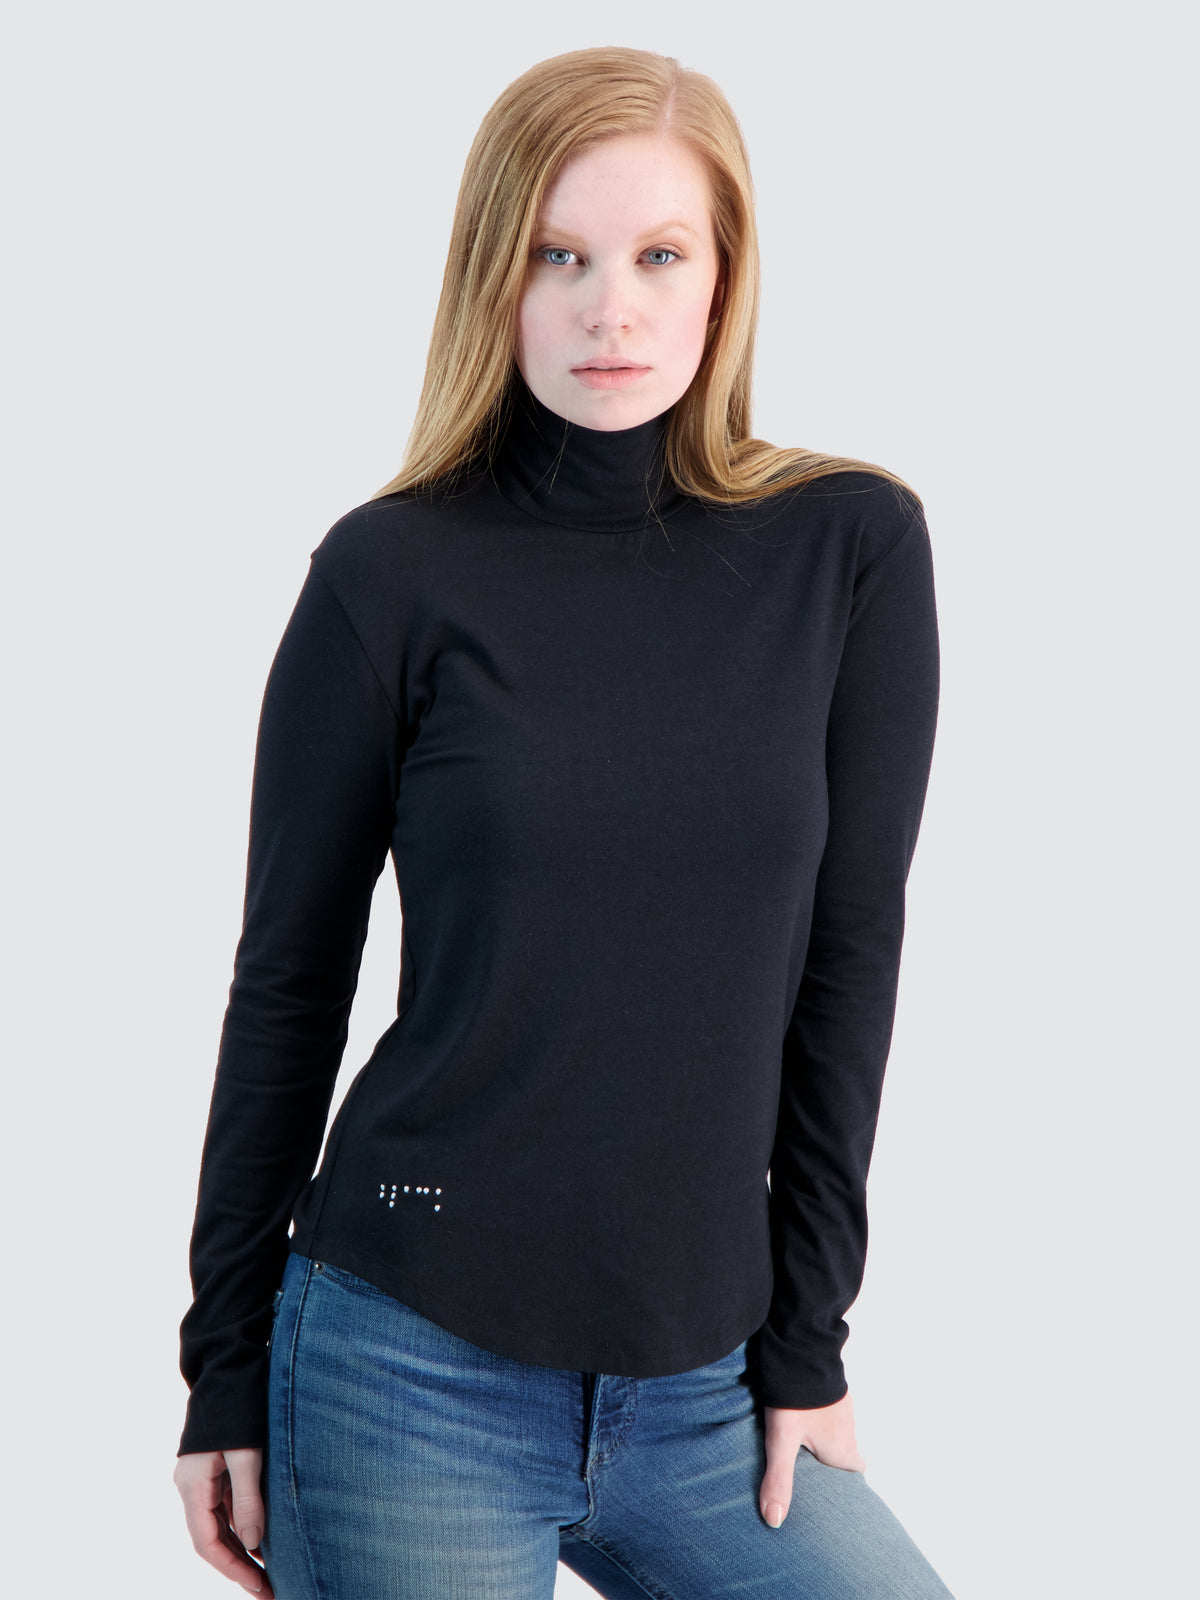 Women's Turtleneck Sweater Bodysuit, Women's Tops